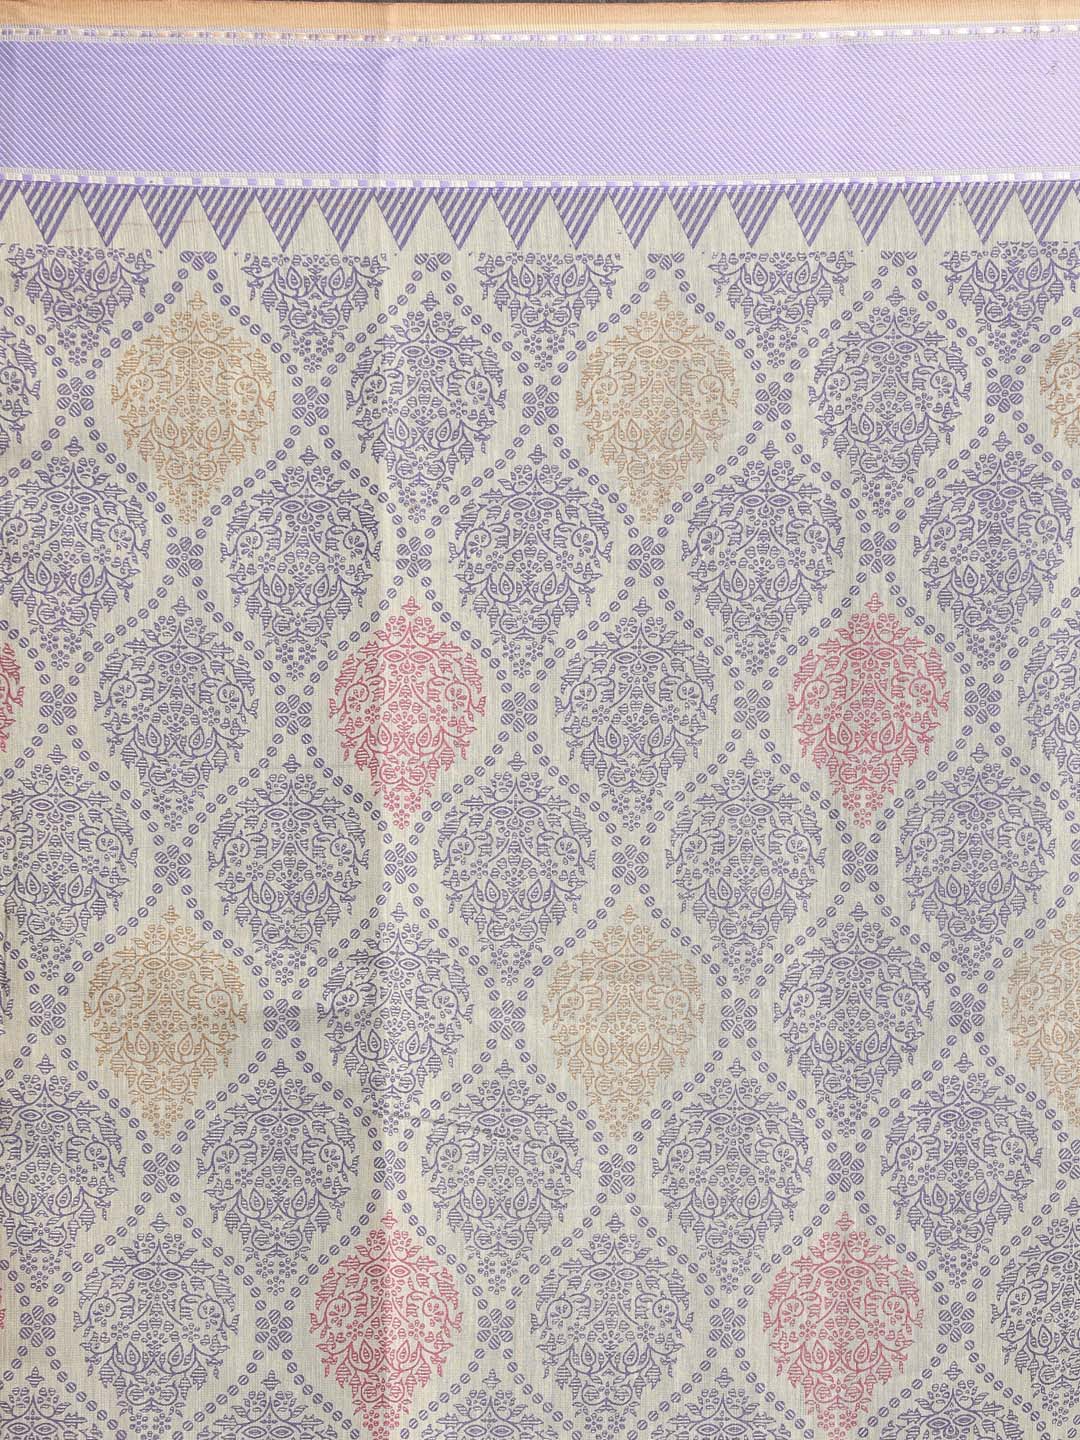 Indethnic Printed Cotton Blend Saree in Purple - Saree Detail View